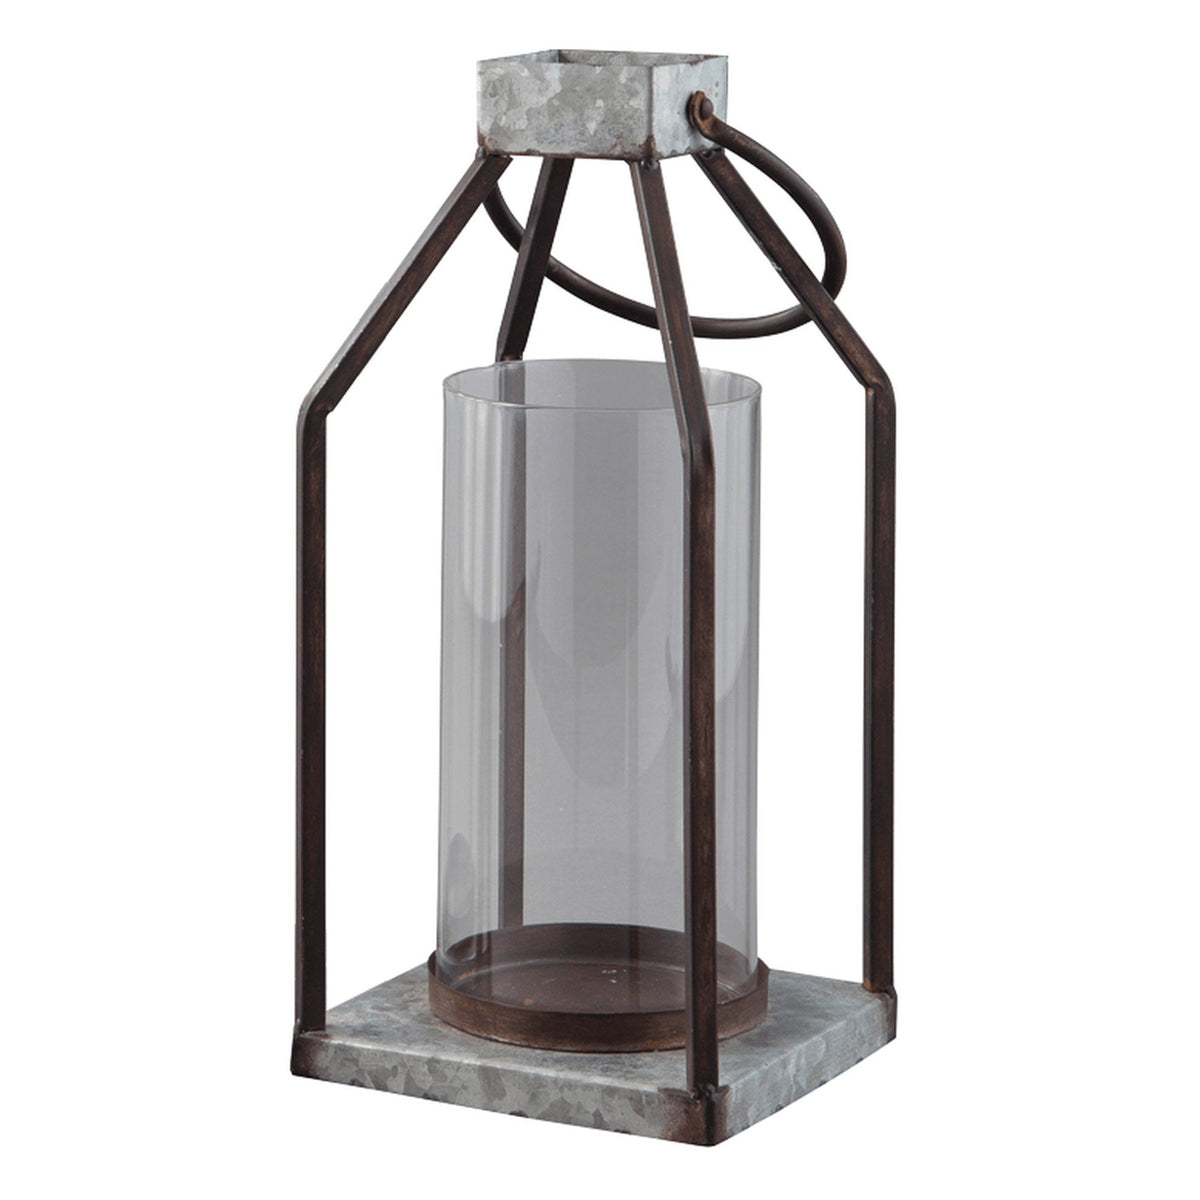 Geometric Lantern with Glass Hurricane, Set of 2, Black and Gray - BM230988